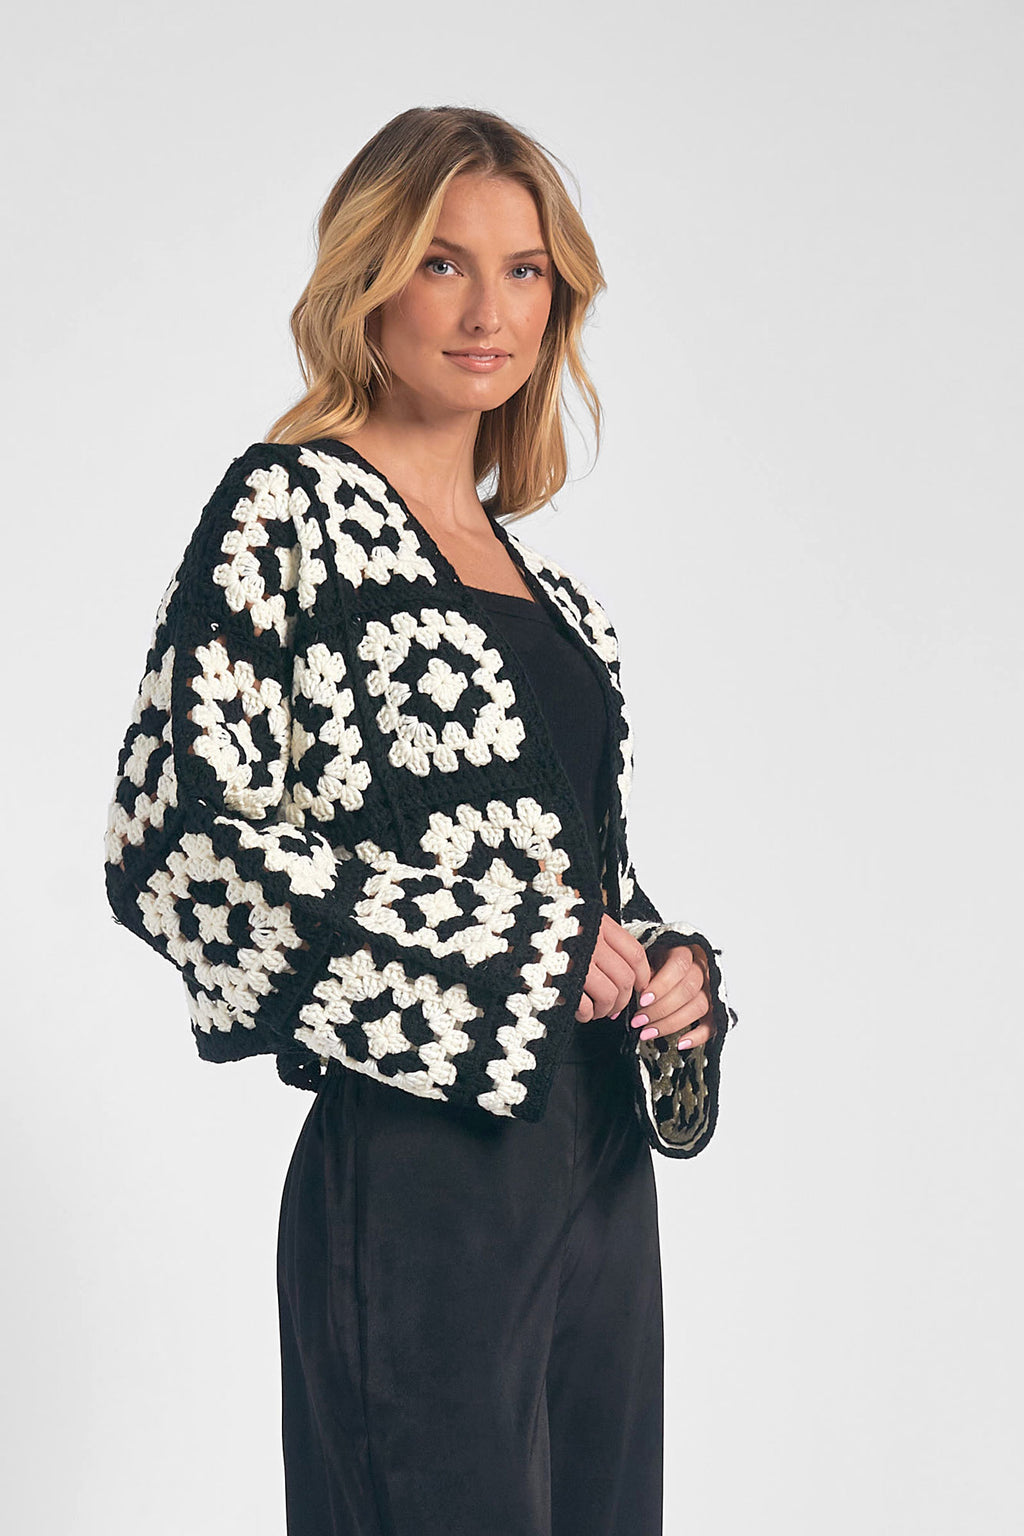 Elan Crochet Sweater Cardigan in Black and White